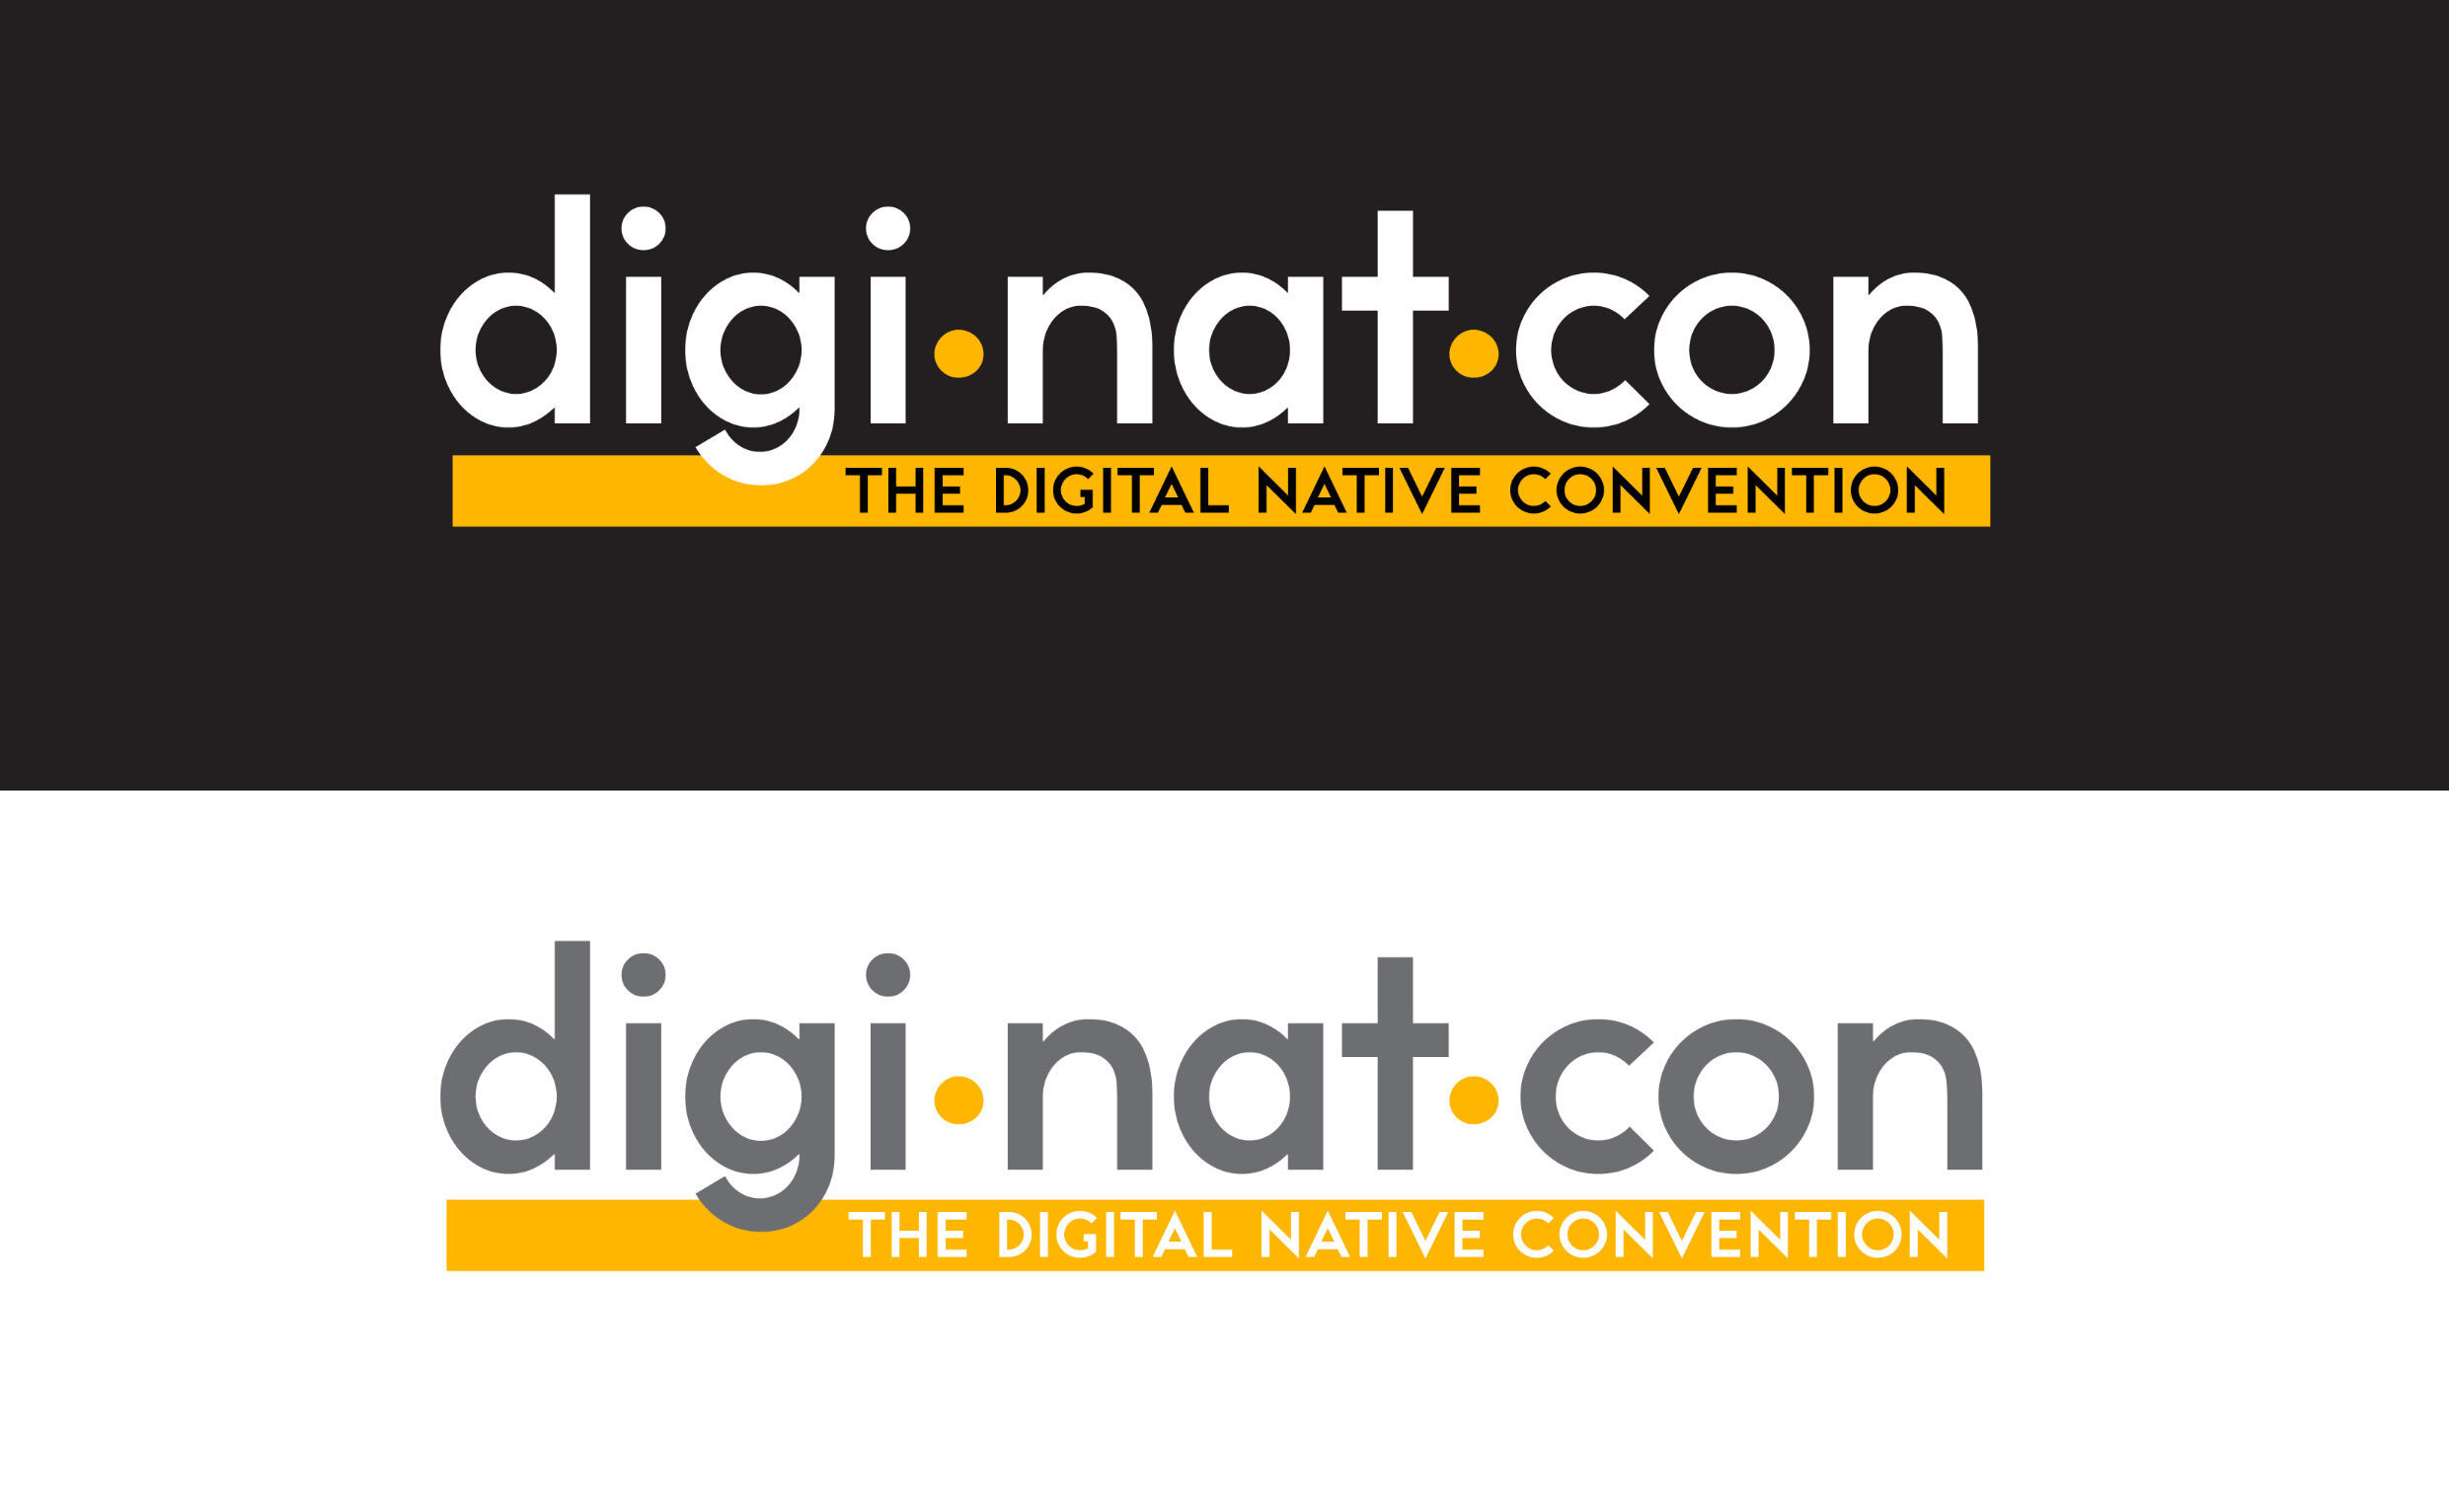 DigiNatCon Logos.jpg